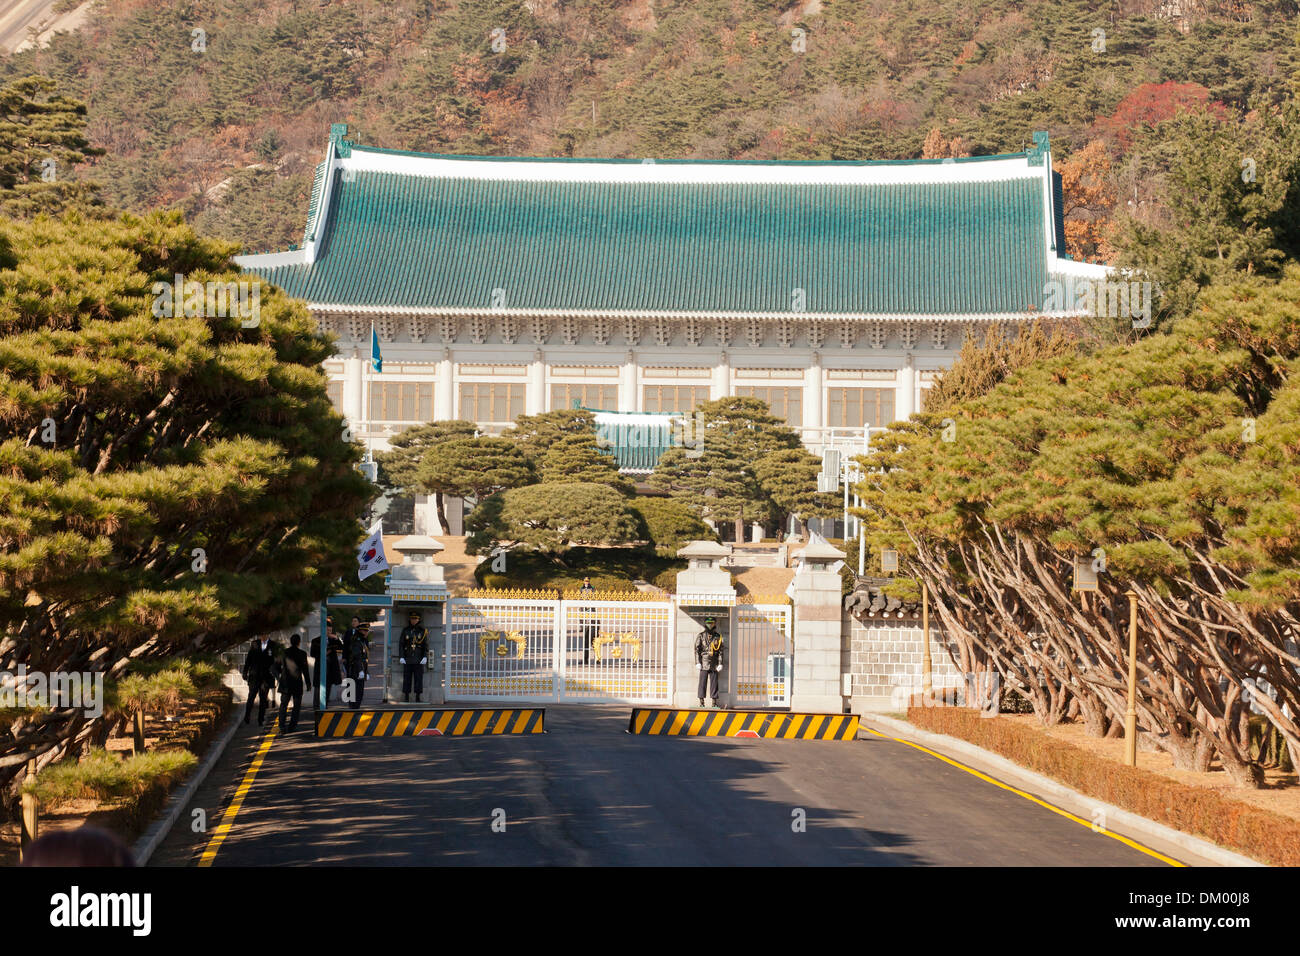 Main entrance of Cheongwadae (Blue House / Pavilion of Blue Tiles) - Seoul, South Korea Stock Photo